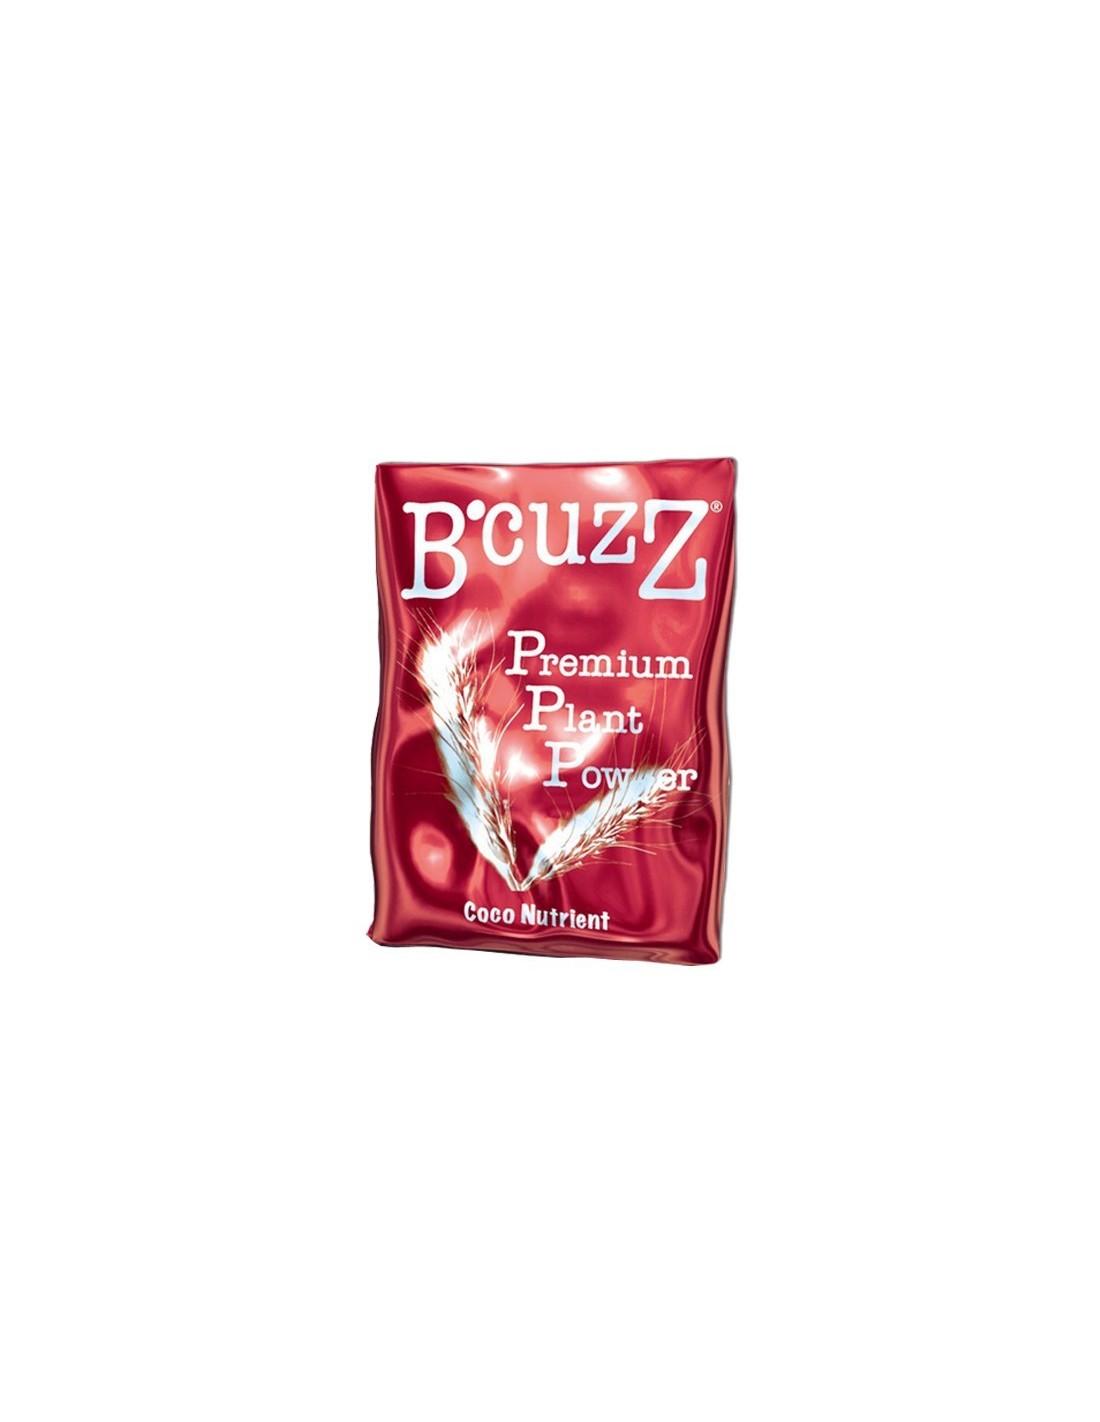 B'Cuzz Premium Plant powder Coco 1400 gr